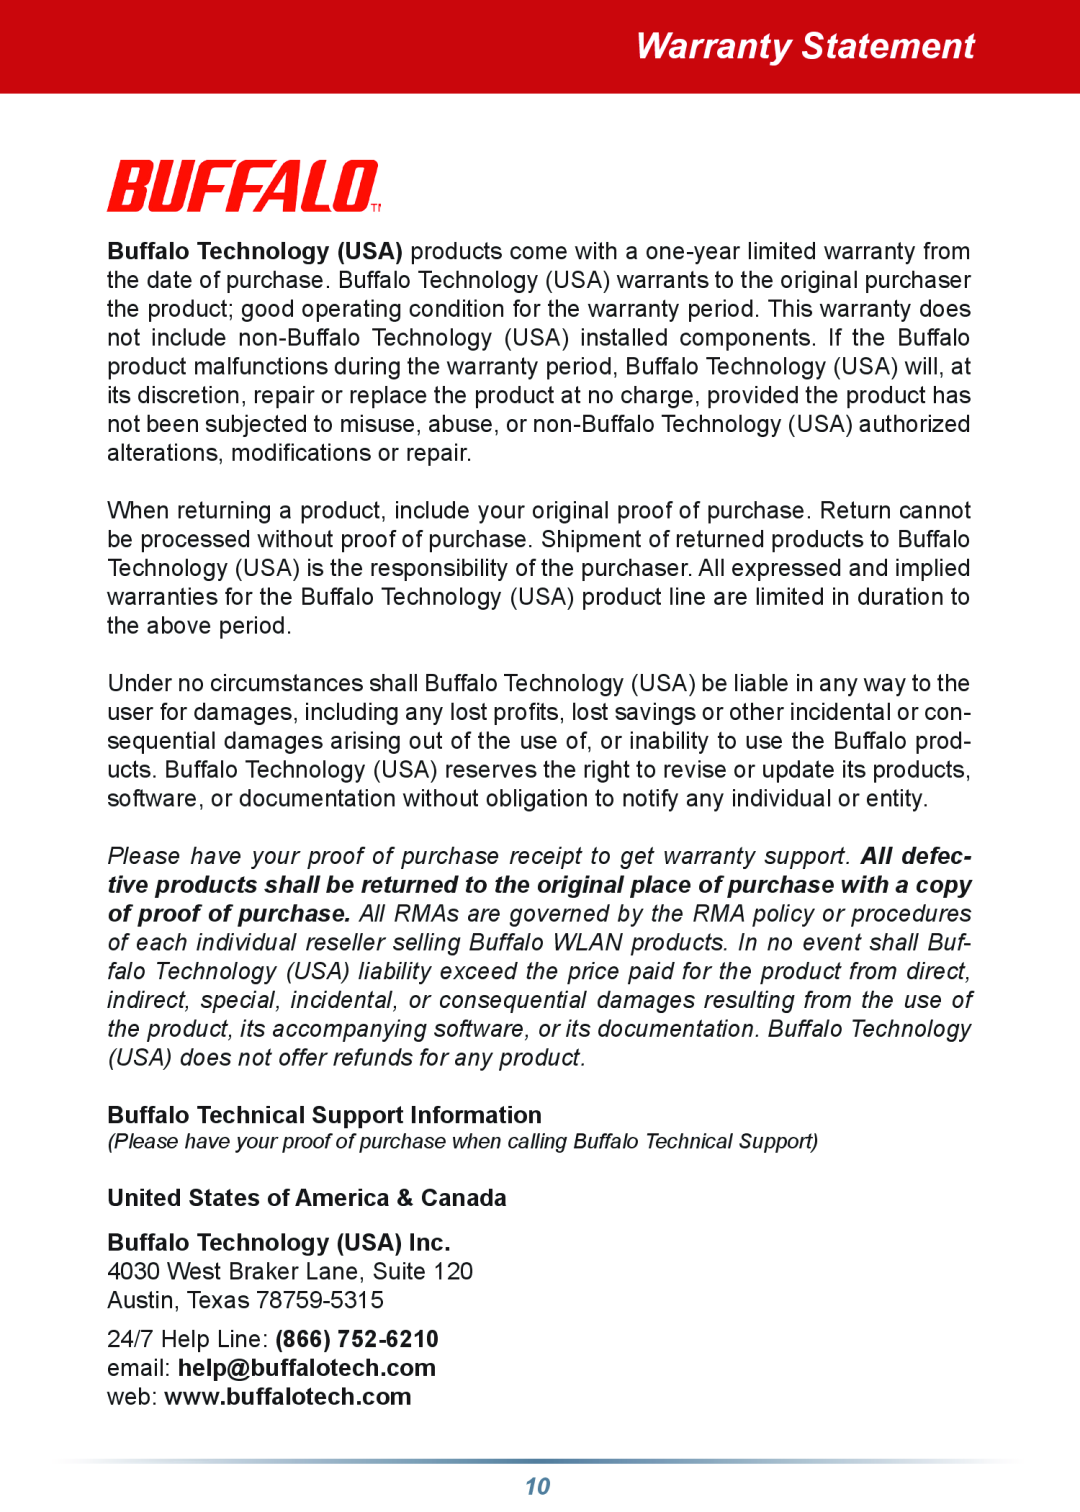 Buffalo Technology HD-HBXXXU2 Warranty Statement, Buffalo Technical Support Information, United States of America & Canada 